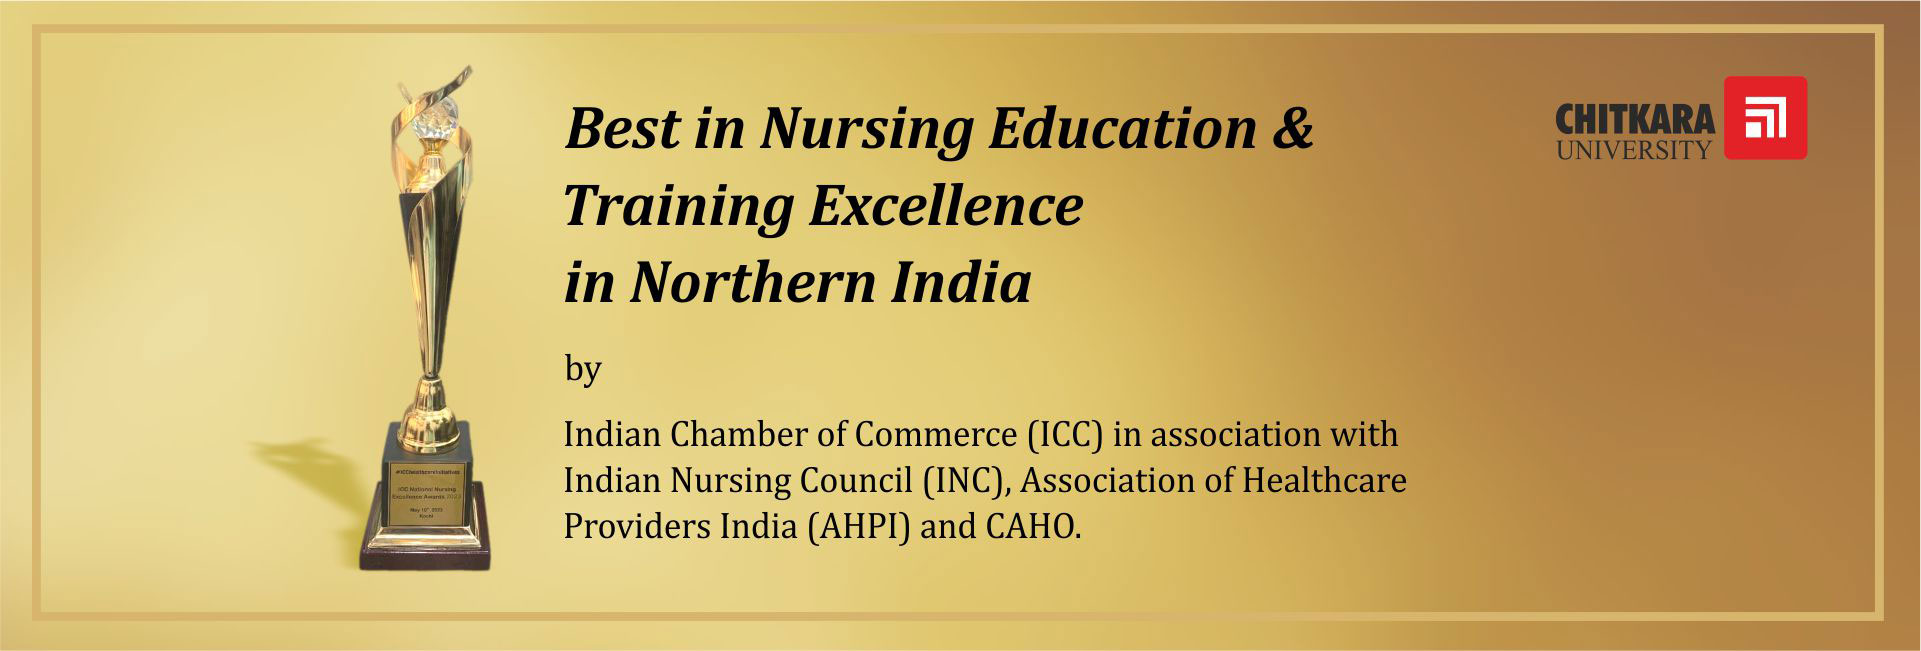 Nursing Education & Training Excellence - chitkara university